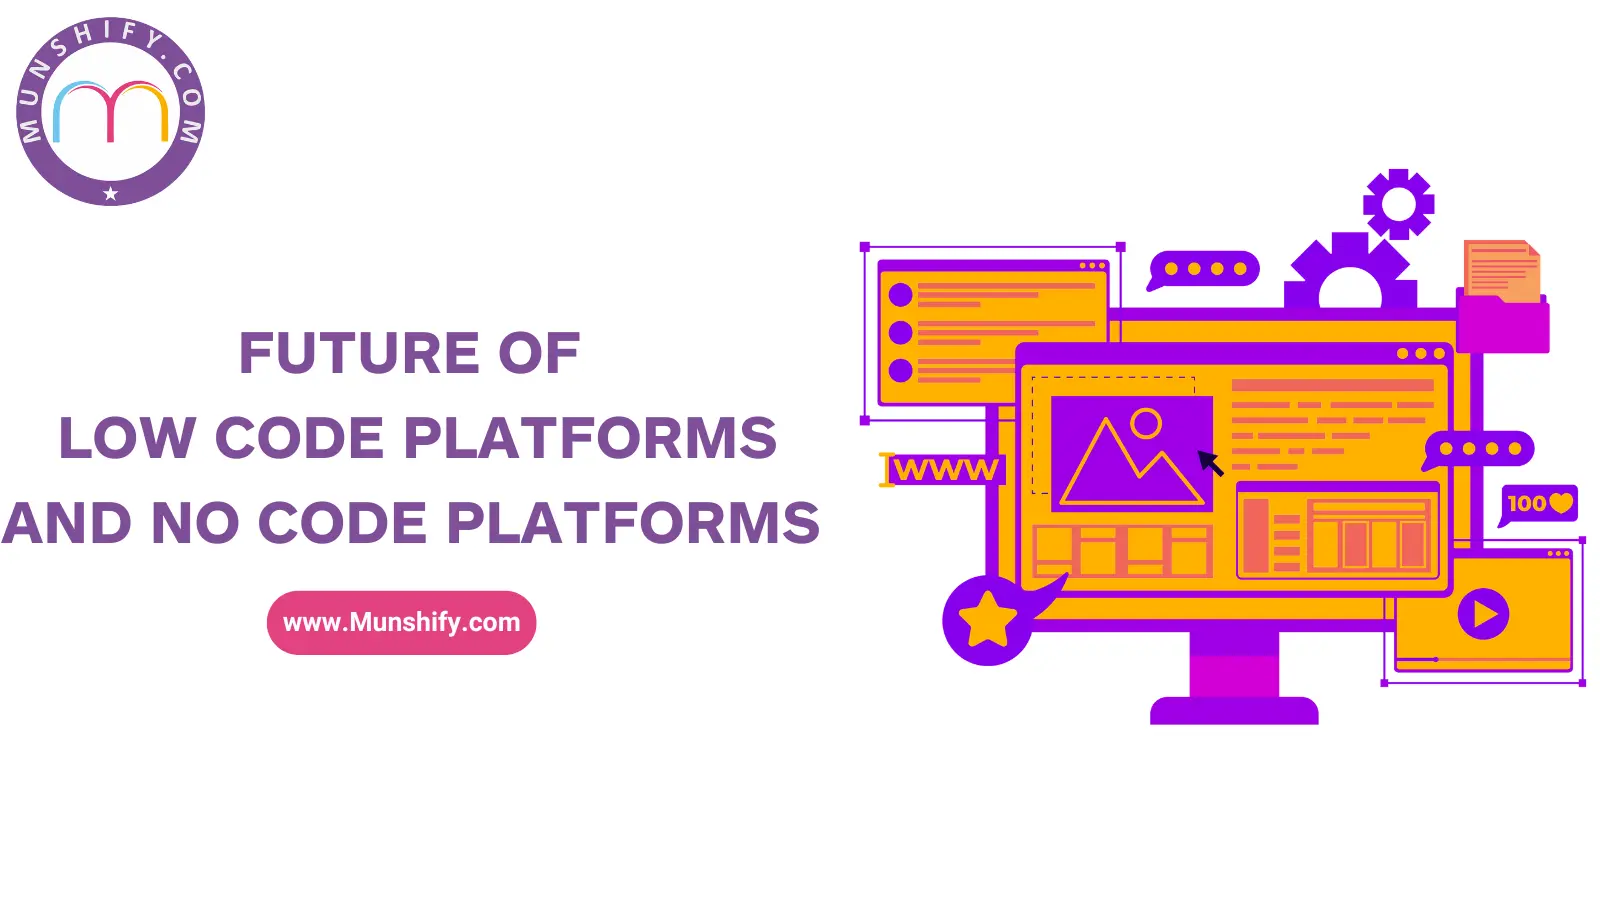 Future of Low Code Platforms and No Code Platforms